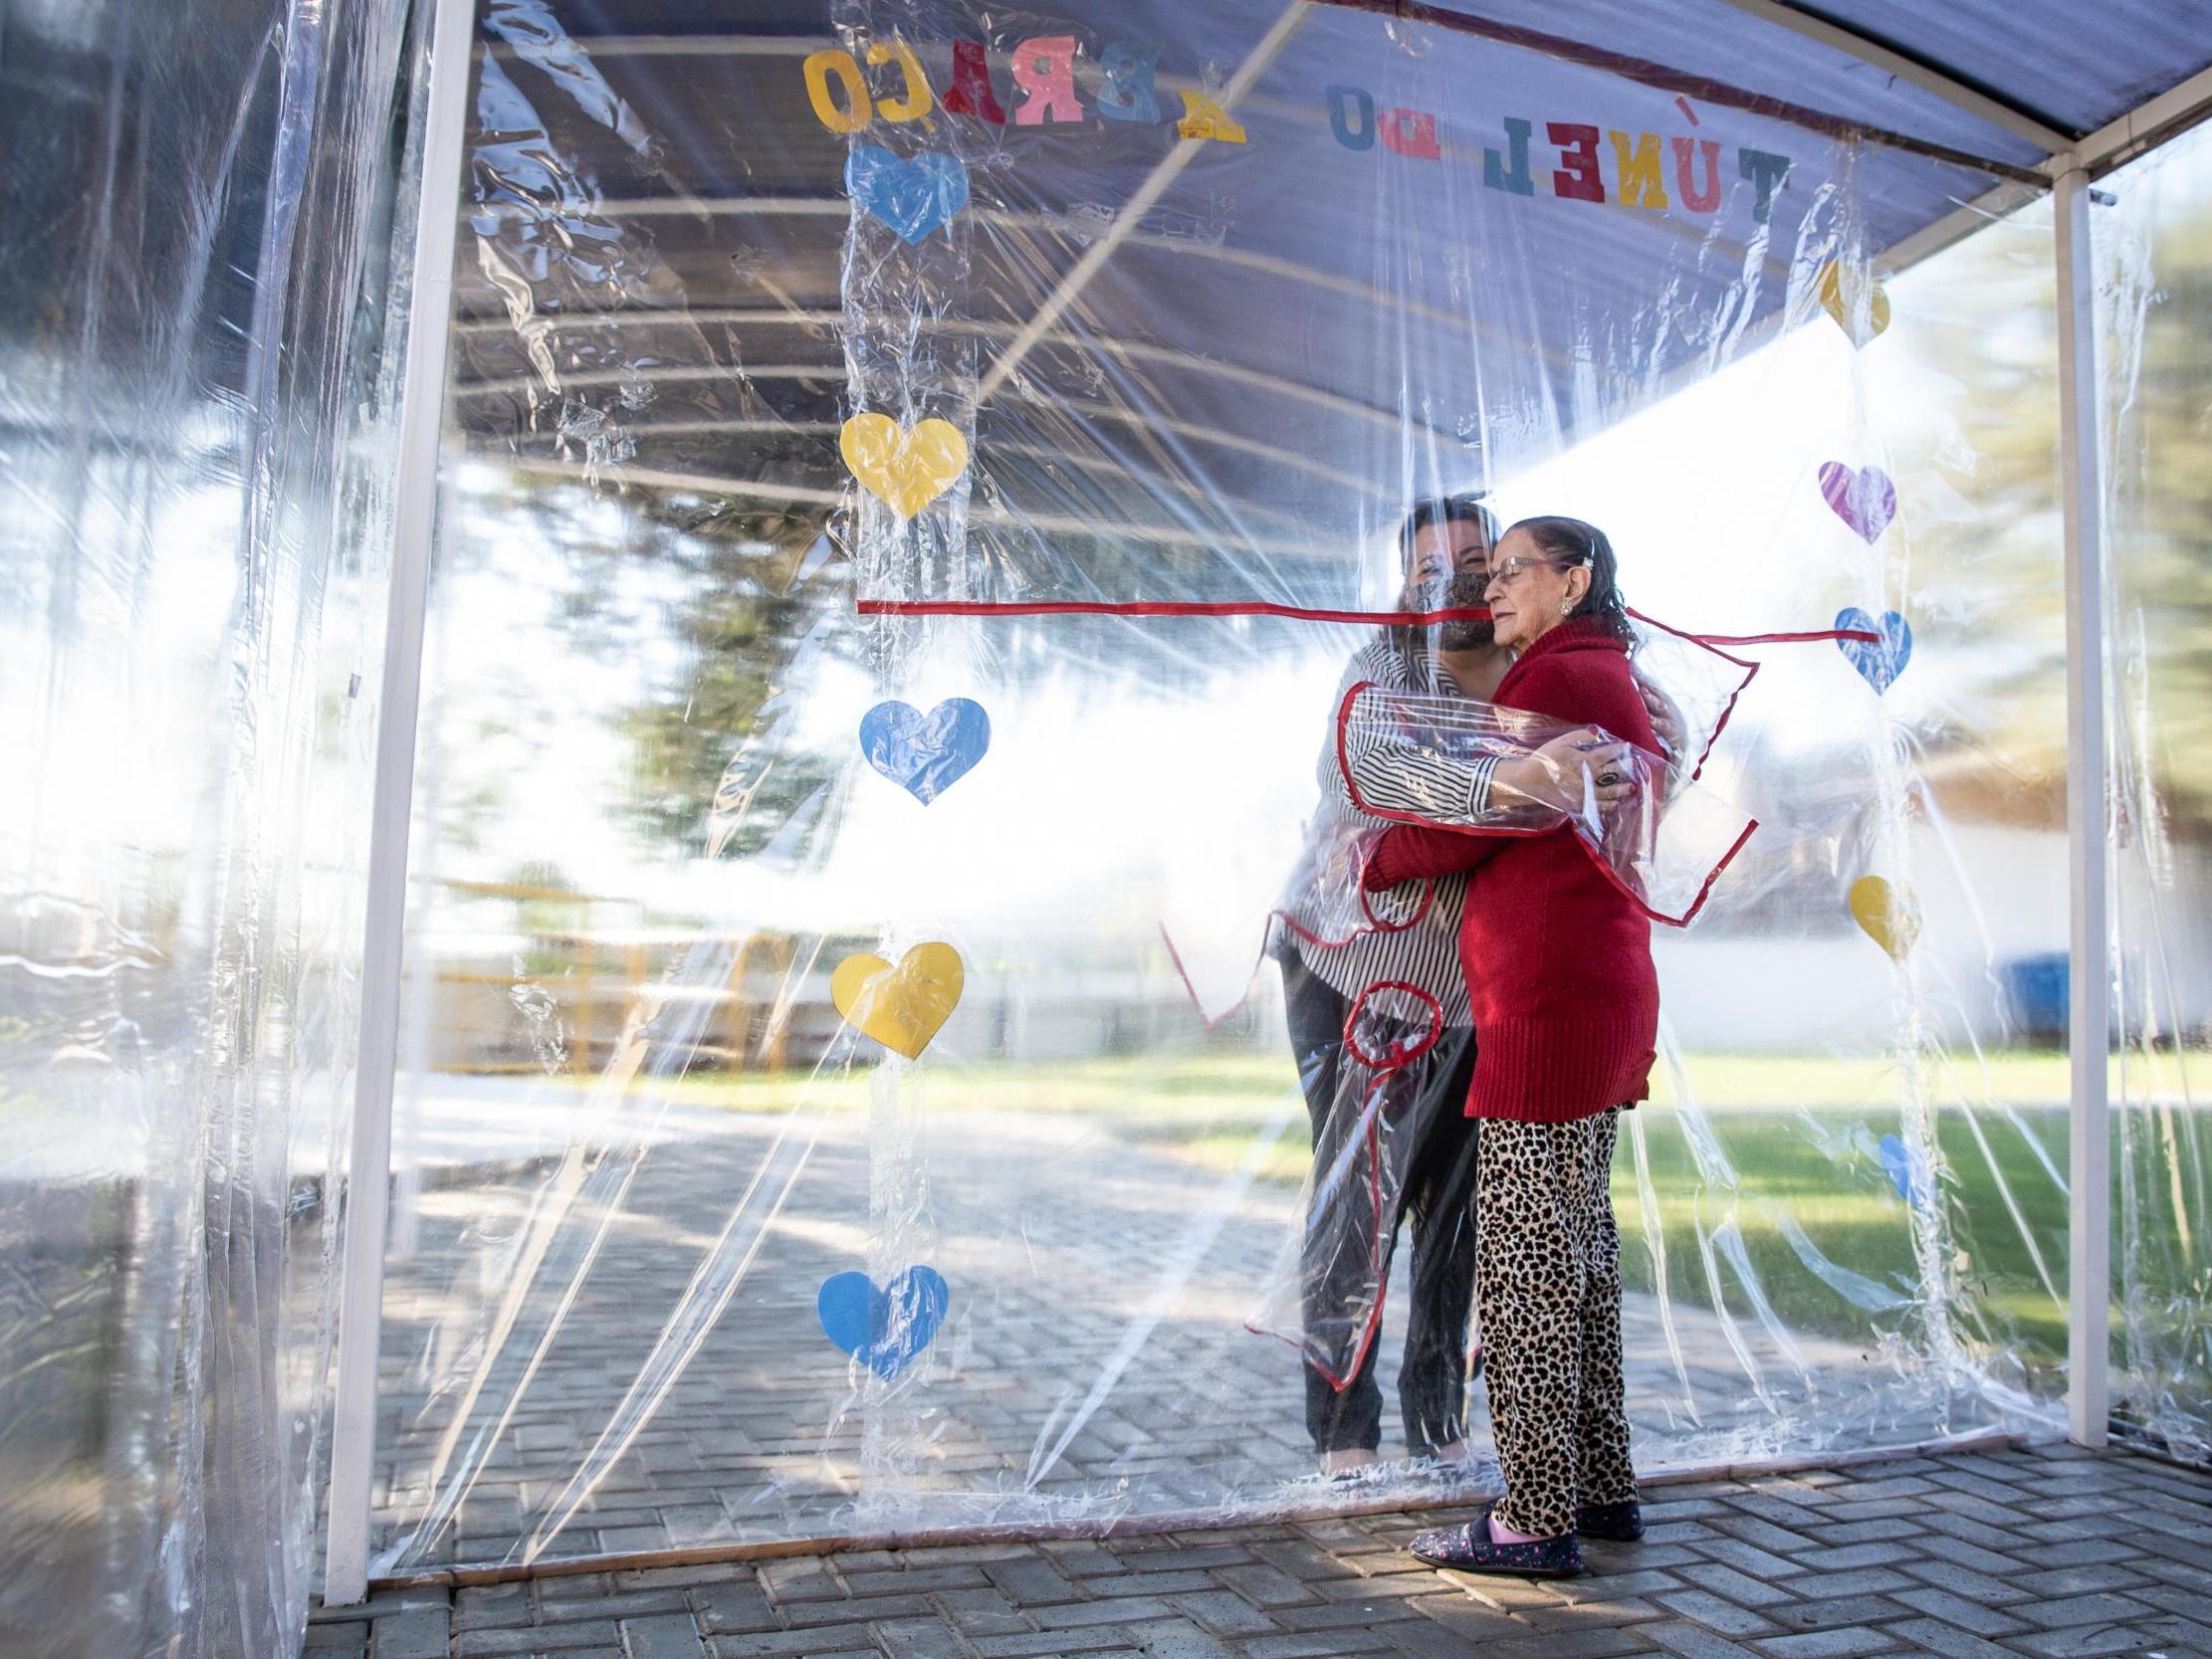 Coronavirus: Brazil care home makes 'hug tunnel' so residents can embrace loved ones